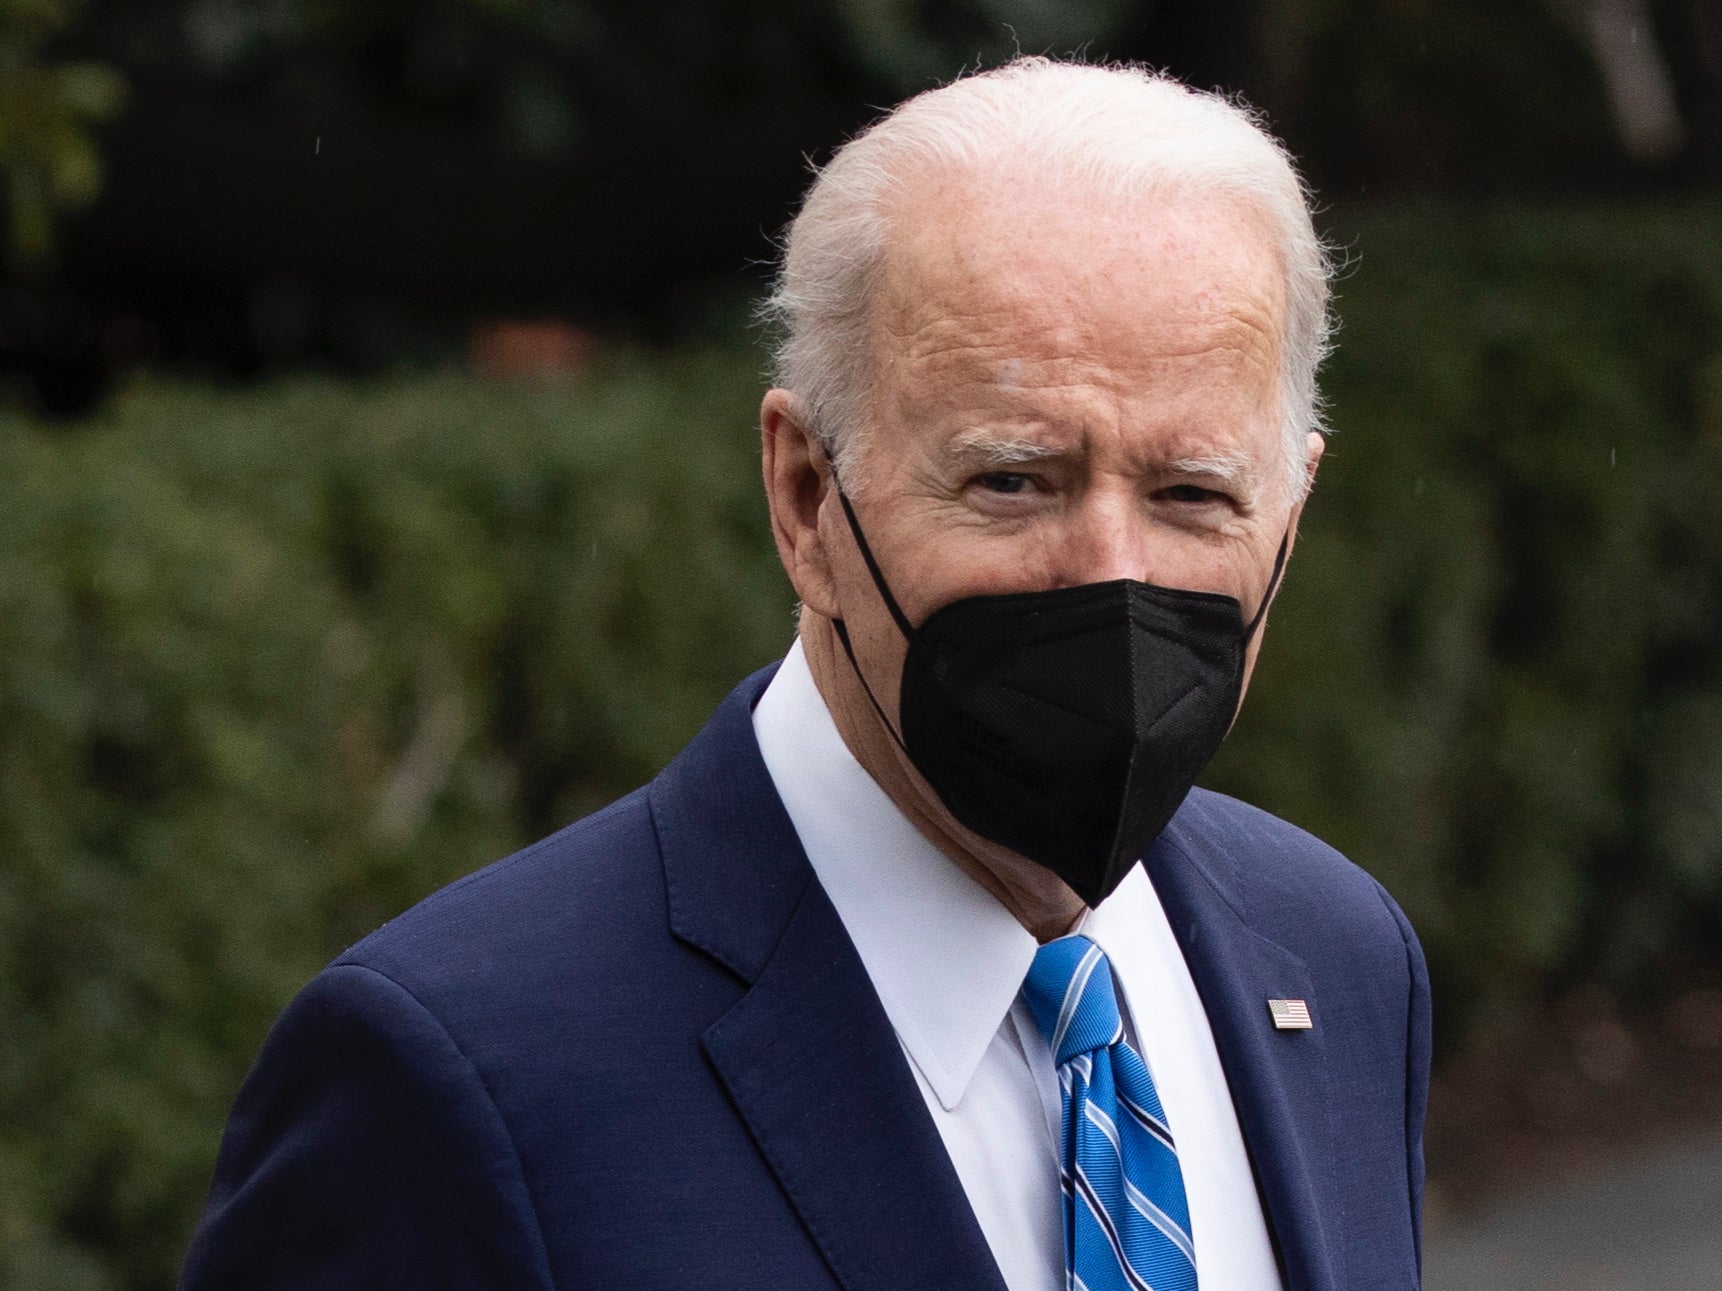 Joe Biden departing the White House on Monday